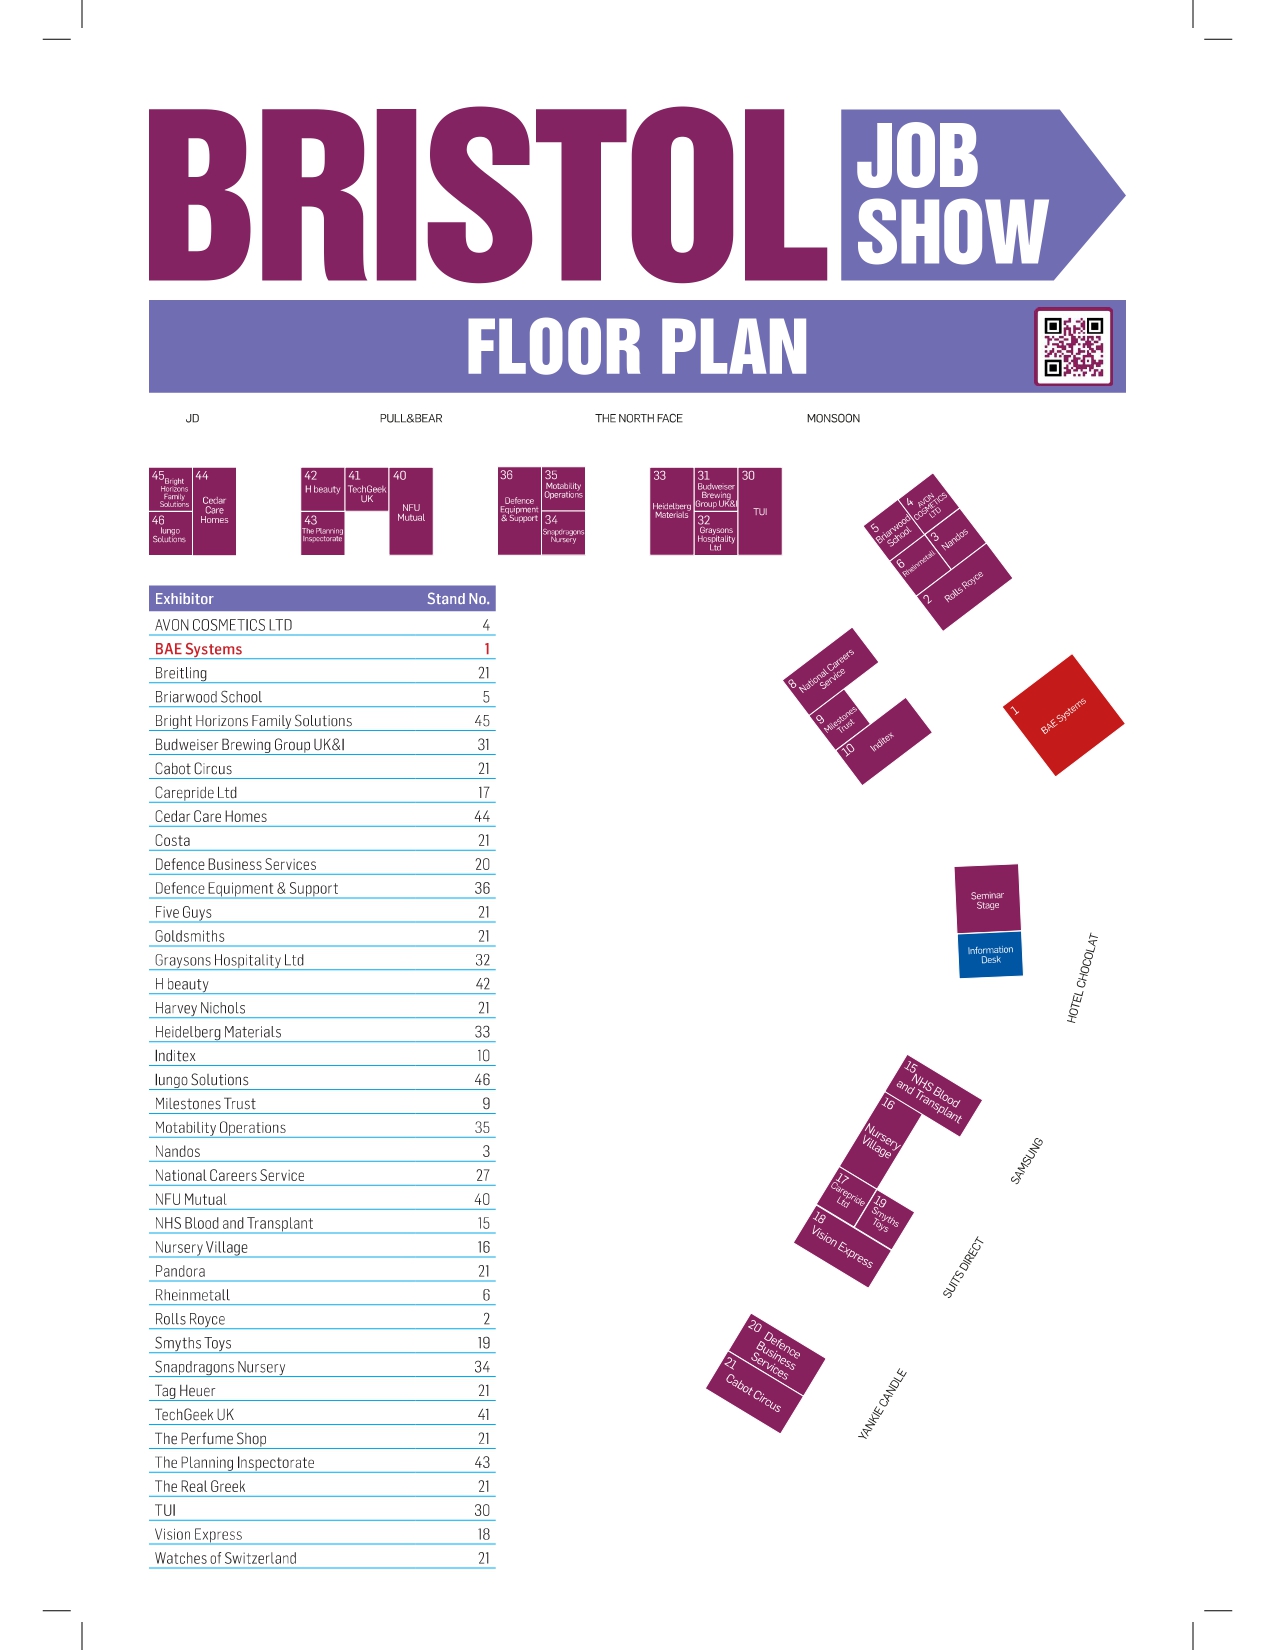 Bristol Job Show Floor Plan